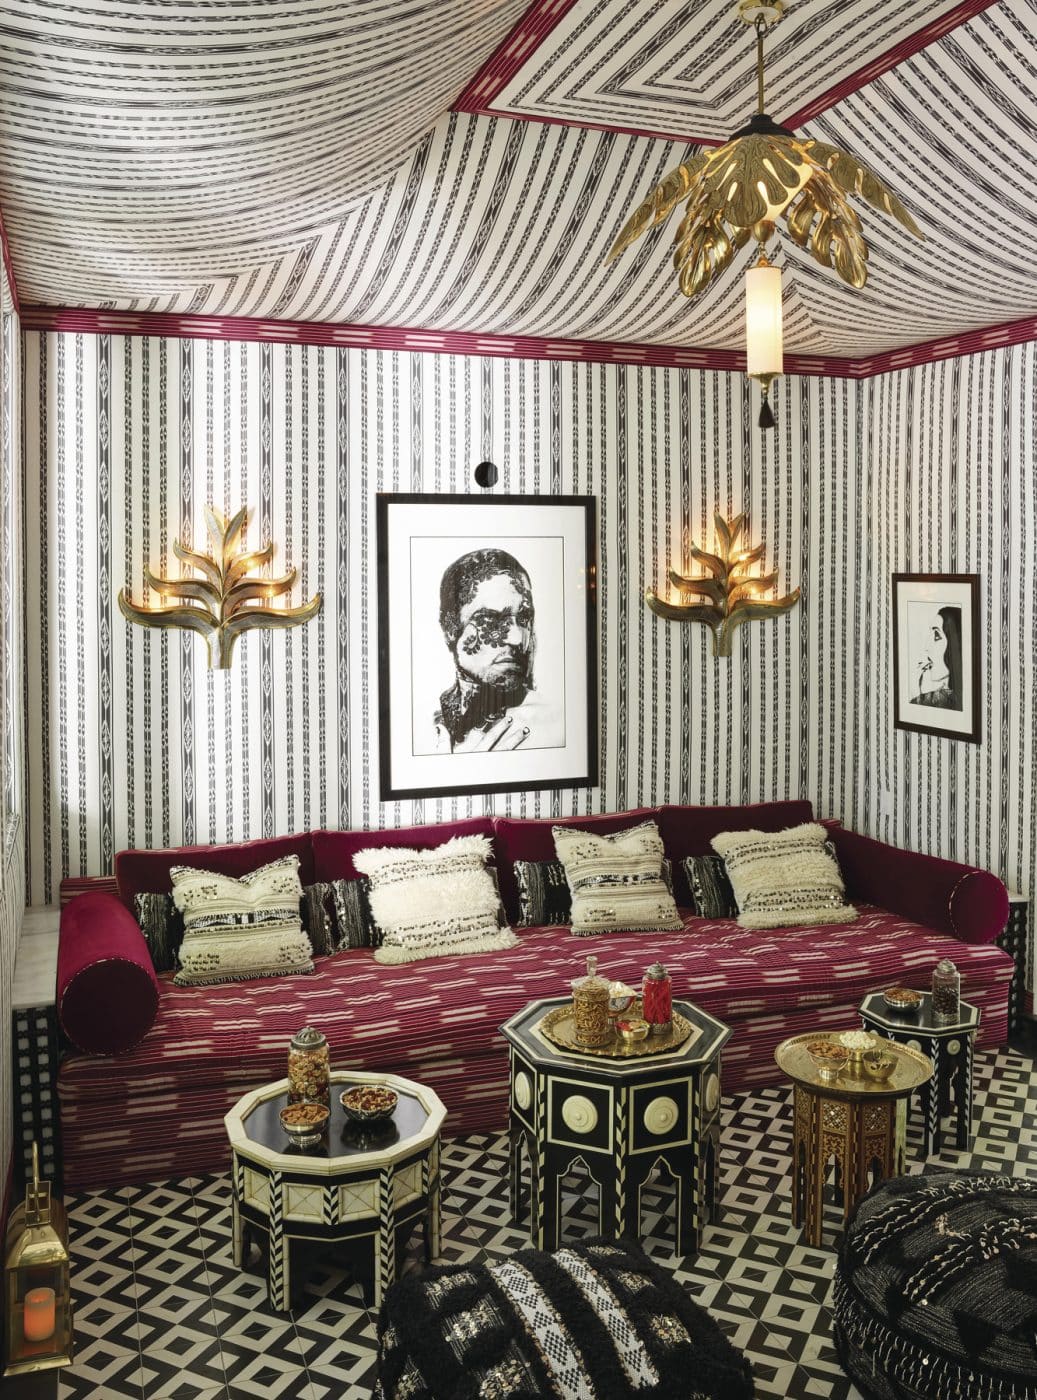 Moroccan-style screening room in the home of interior designer Martyn Lawrence Bullard